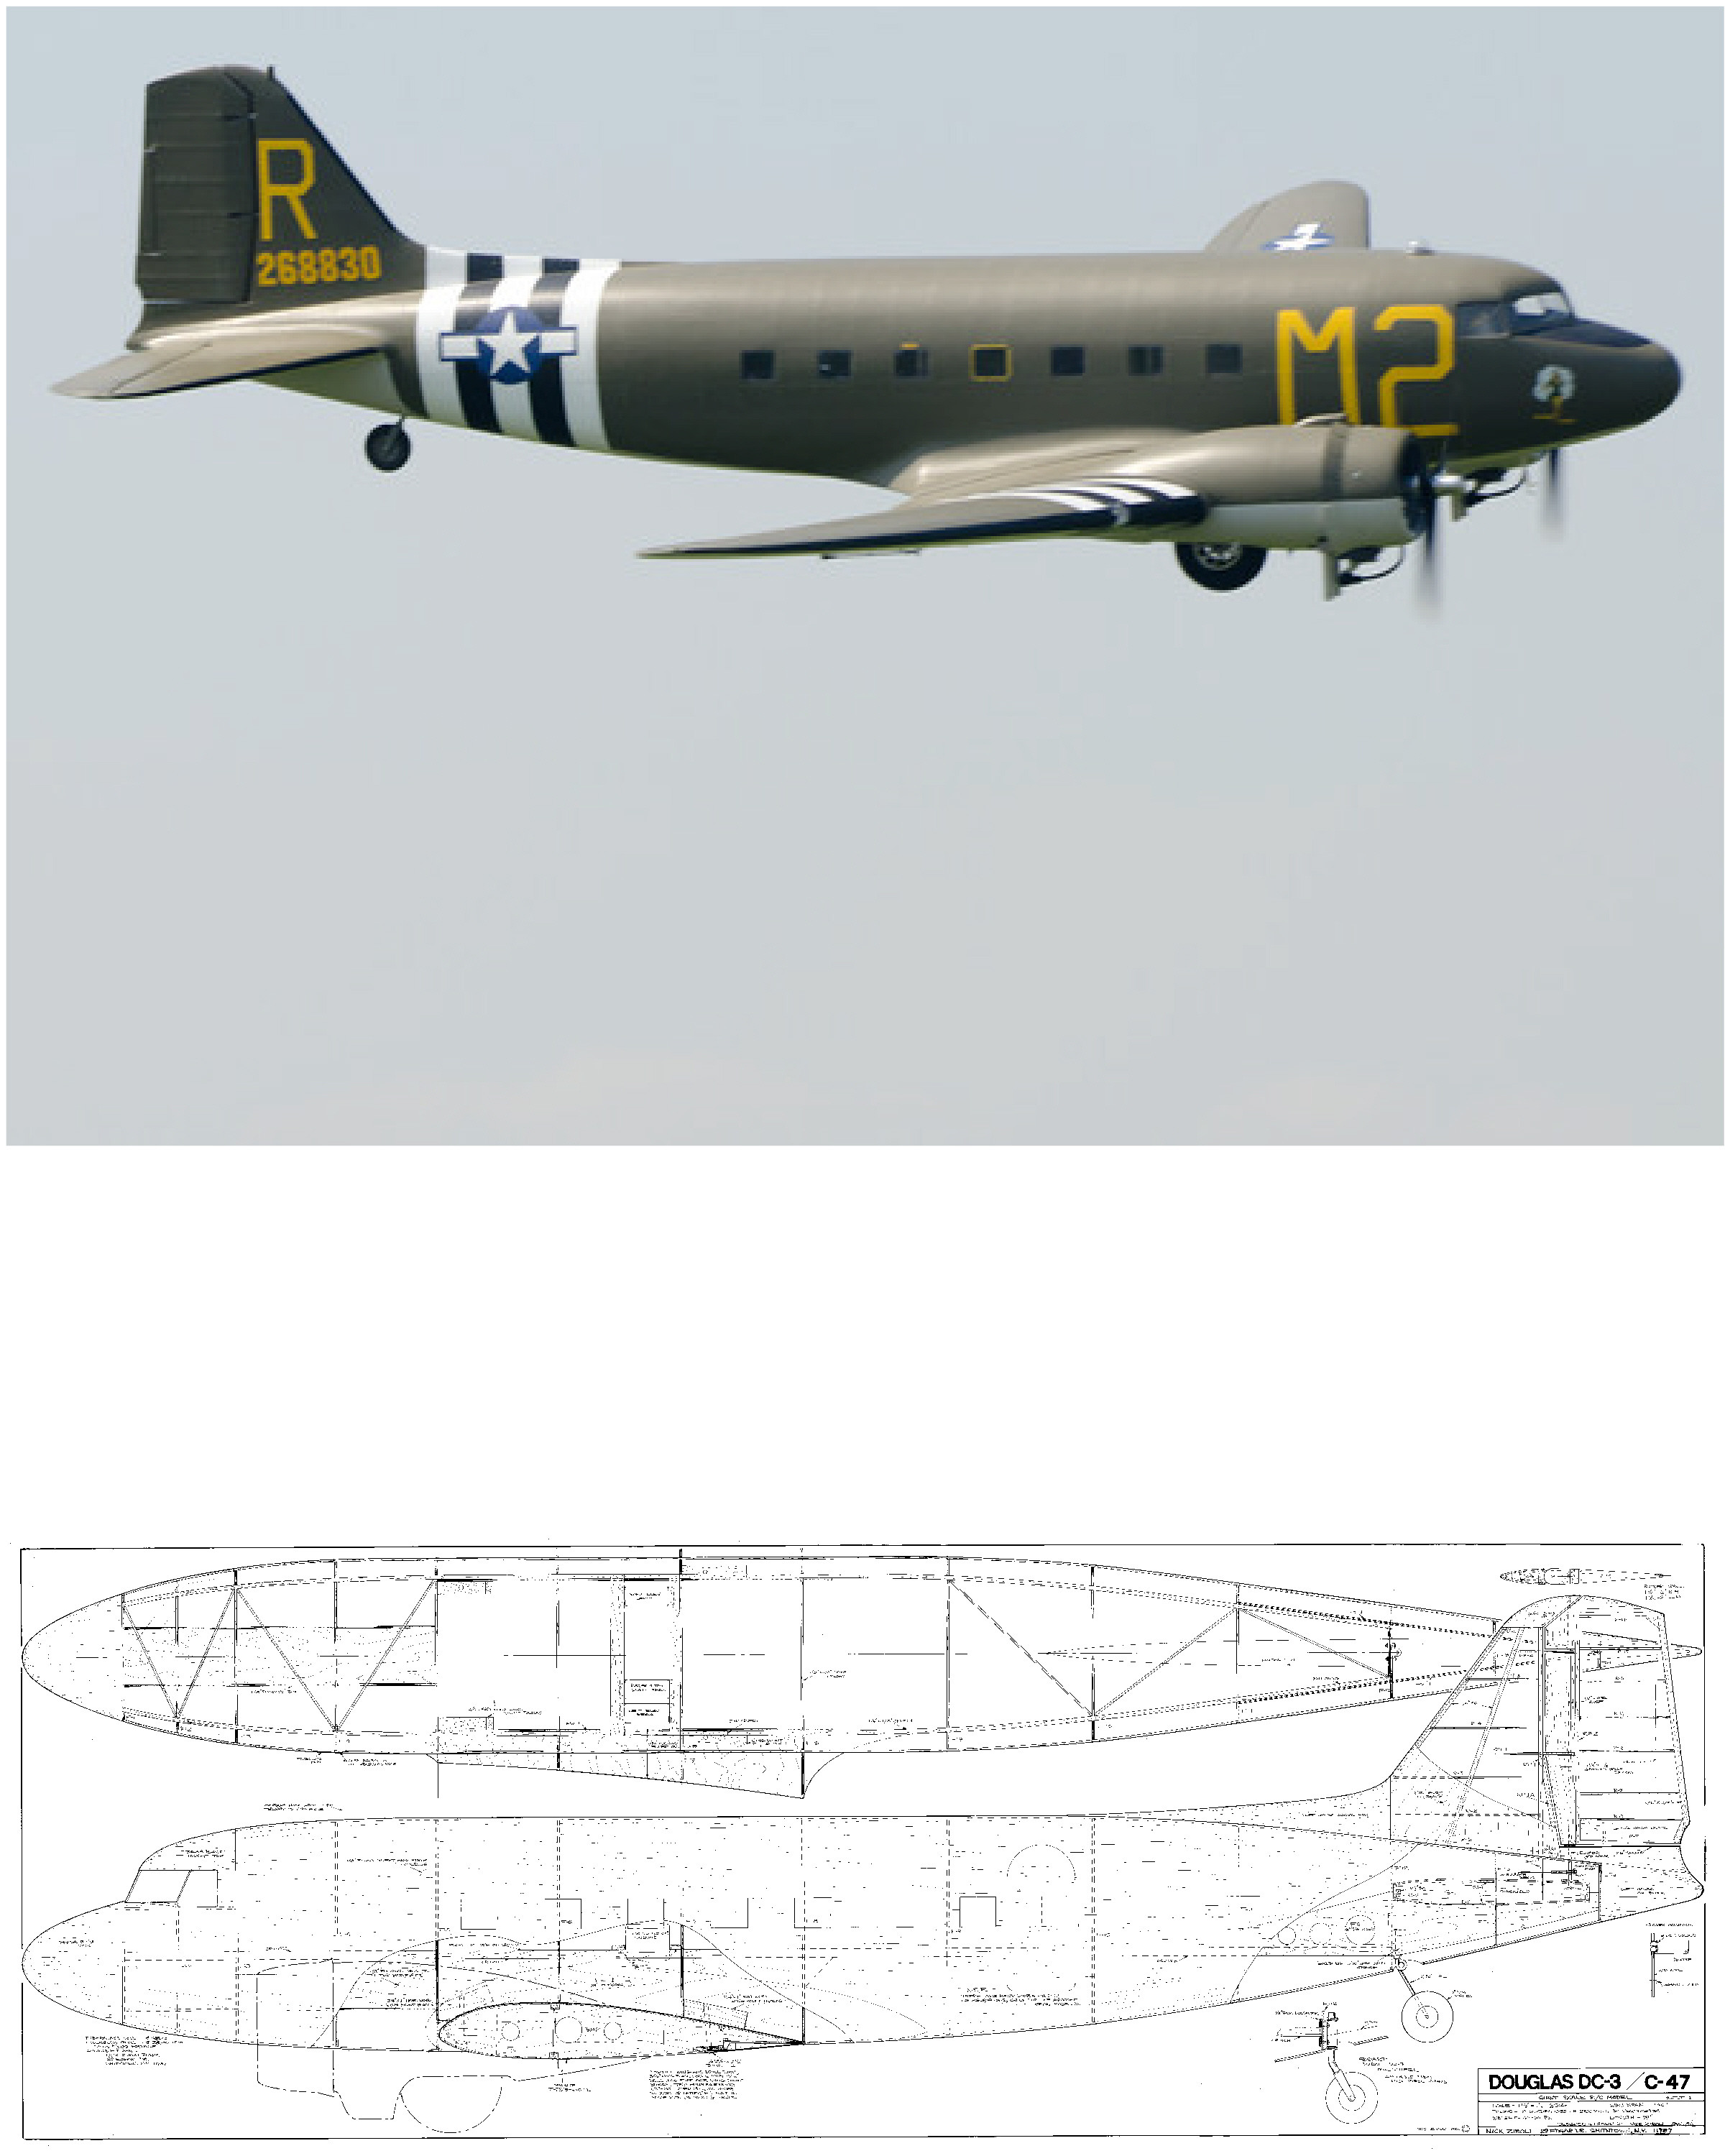 Douglas DC-3 Display Model Balsa Aircraft Kit 900mm Wingspan from Guillow's